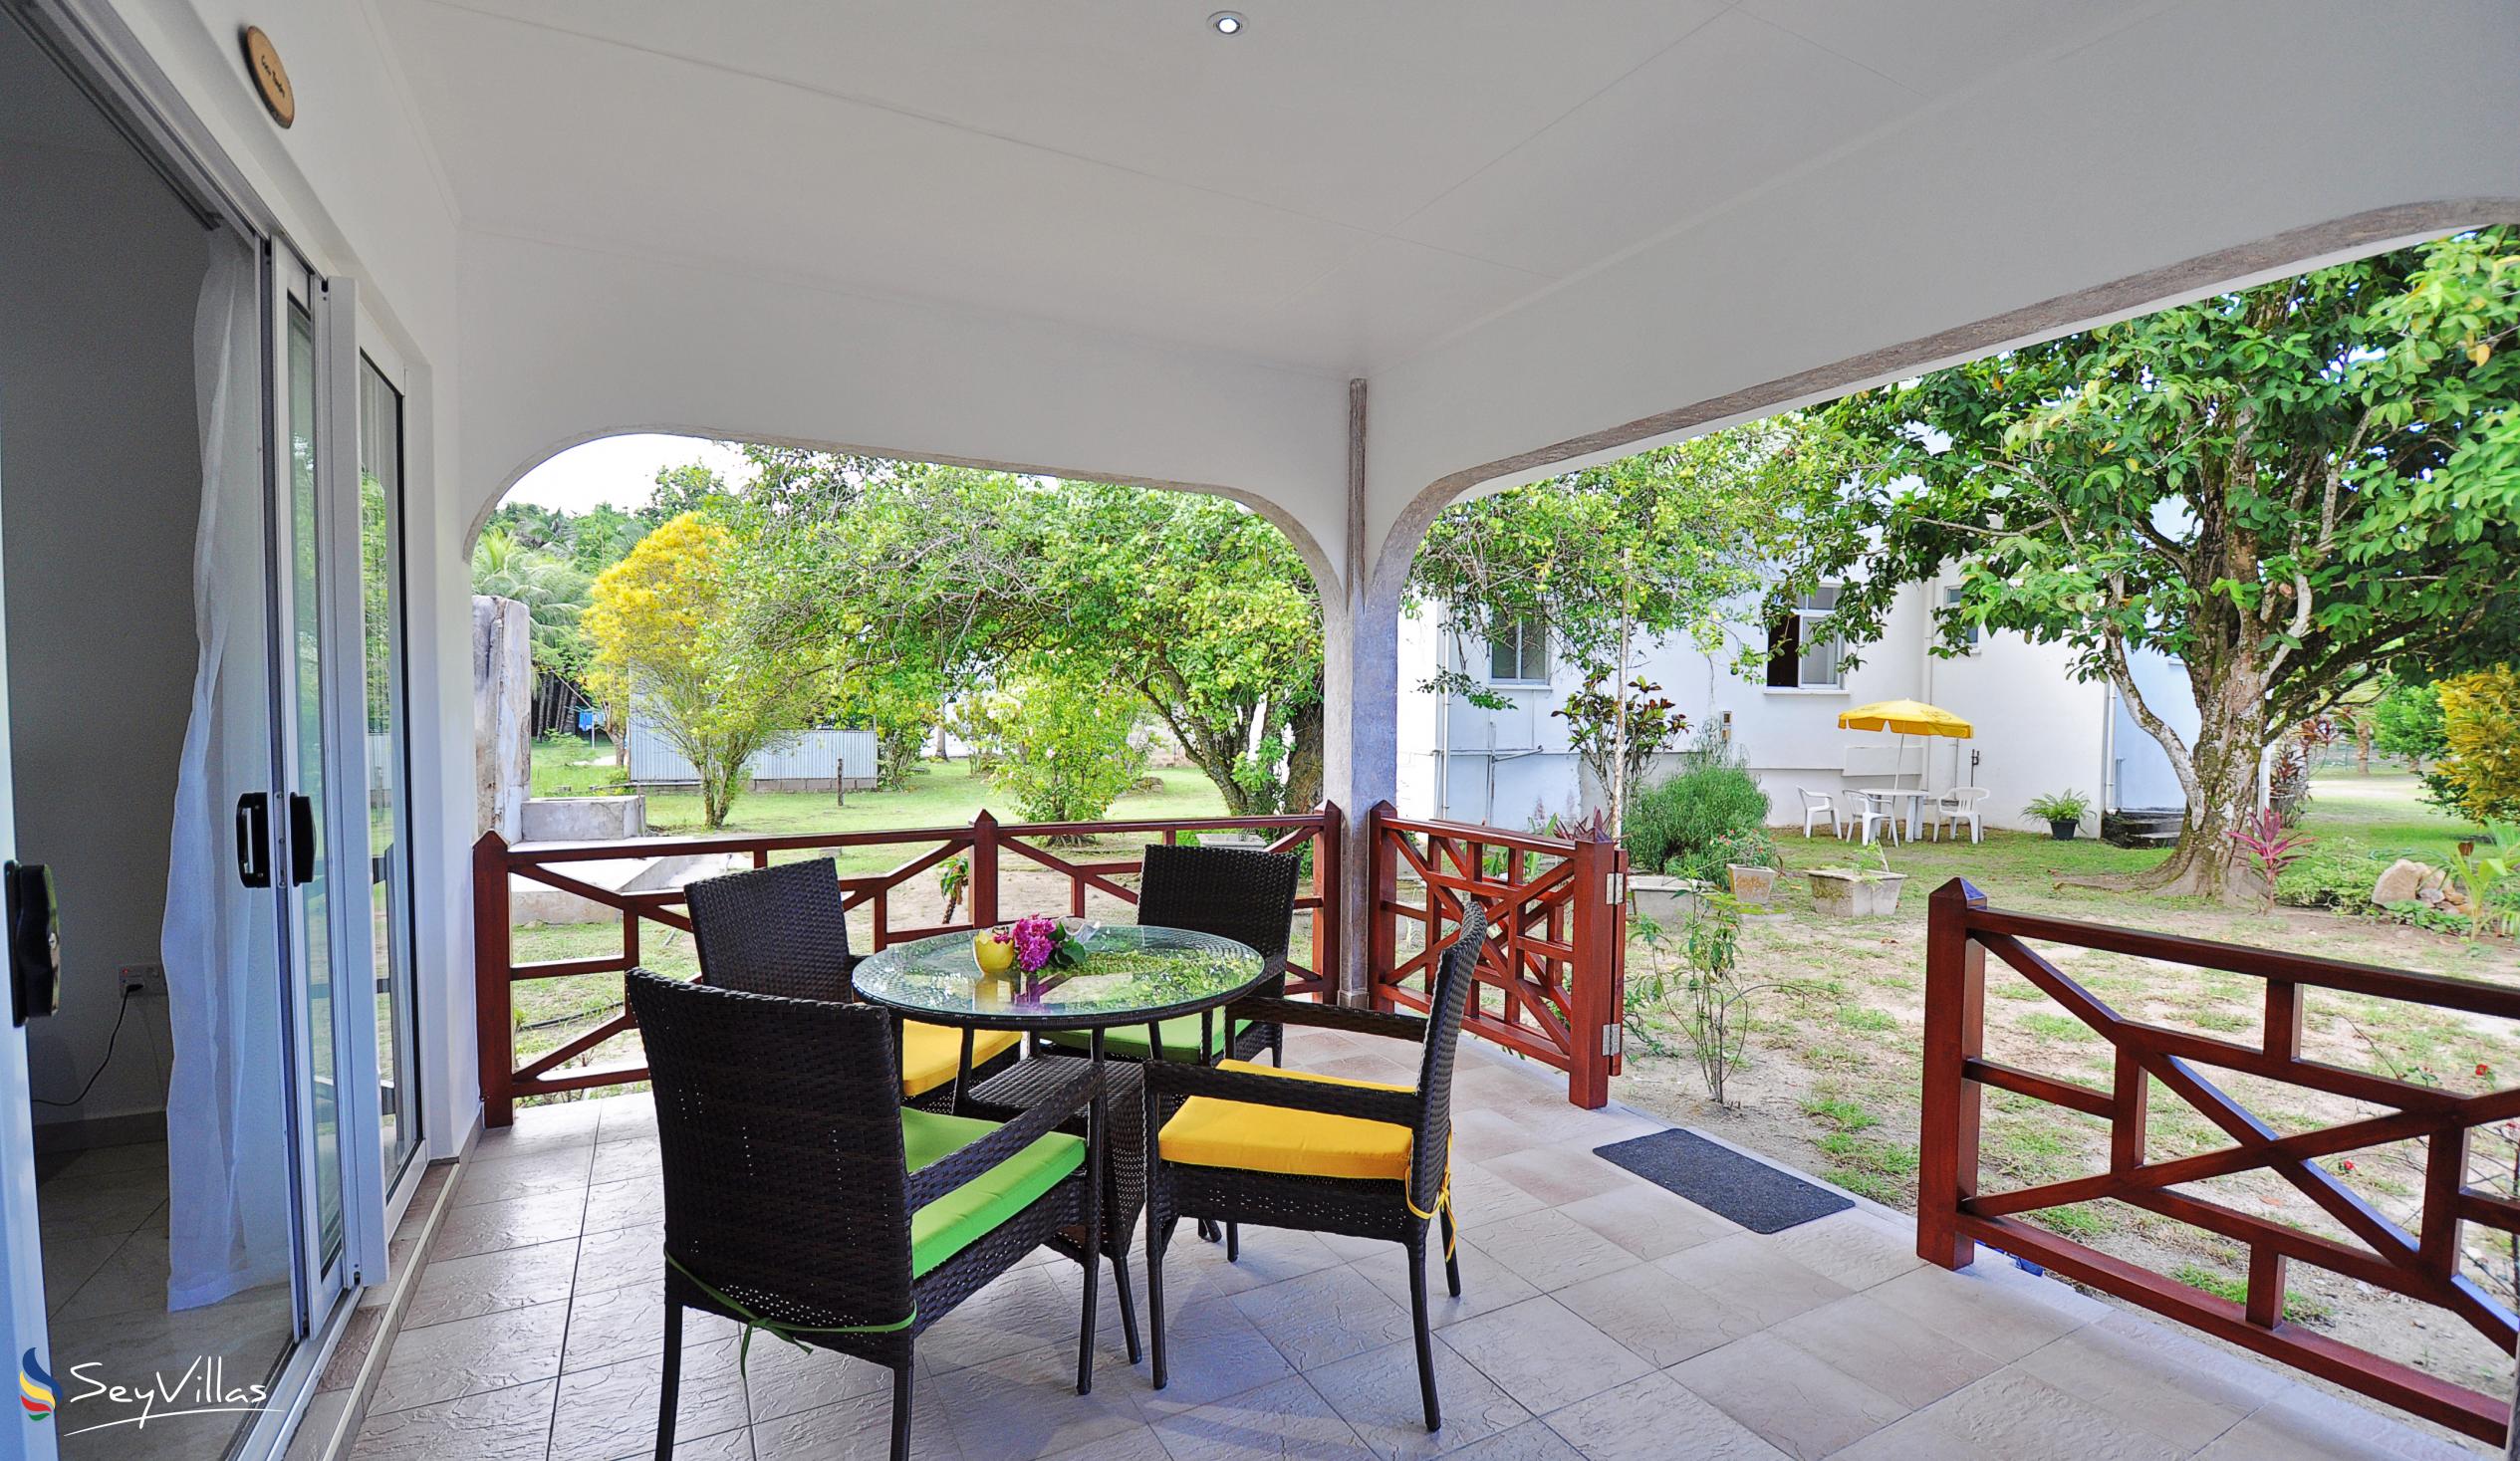 Foto 12: Coco Blanche - Villa mit Gartenblick - Mahé (Seychellen)